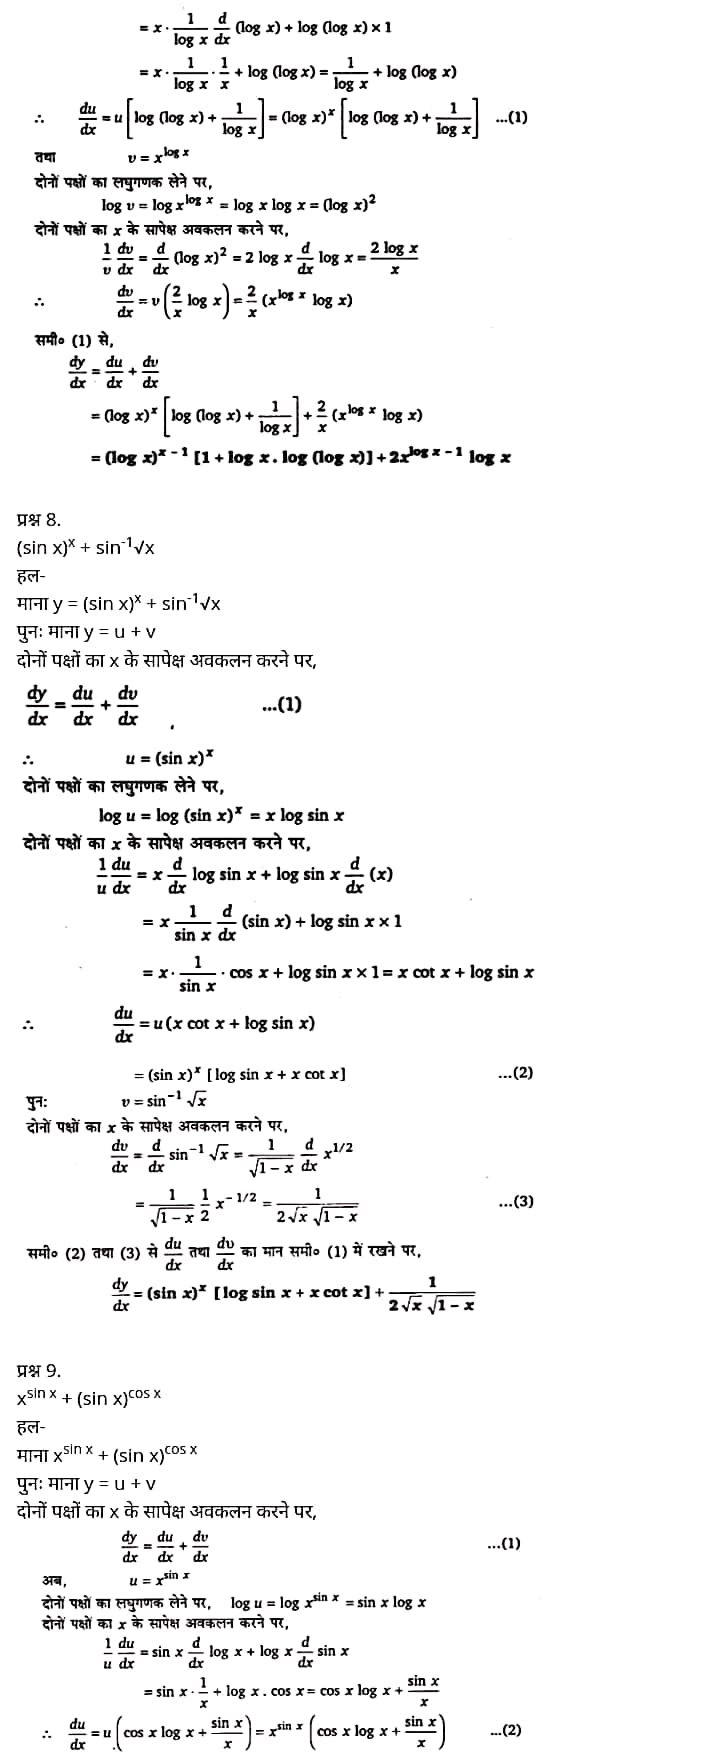 Class 12 Maths Chapter 5, Continuity and Differentiability Hindi Medium,  मैथ्स कक्षा 12 नोट्स pdf,  मैथ्स कक्षा 12 नोट्स 2020 NCERT,  मैथ्स कक्षा 12 PDF,  मैथ्स पुस्तक,  मैथ्स की बुक,  मैथ्स प्रश्नोत्तरी Class 12, 12 वीं मैथ्स पुस्तक RBSE,  बिहार बोर्ड 12 वीं मैथ्स नोट्स,   12th Maths book in hindi, 12th Maths notes in hindi, cbse books for class 12, cbse books in hindi, cbse ncert books, class 12 Maths notes in hindi,  class 12 hindi ncert solutions, Maths 2020, Maths 2021, Maths 2022, Maths book class 12, Maths book in hindi, Maths class 12 in hindi, Maths notes for class 12 up board in hindi, ncert all books, ncert app in hindi, ncert book solution, ncert books class 10, ncert books class 12, ncert books for class 7, ncert books for upsc in hindi, ncert books in hindi class 10, ncert books in hindi for class 12 Maths, ncert books in hindi for class 6, ncert books in hindi pdf, ncert class 12 hindi book, ncert english book, ncert Maths book in hindi, ncert Maths books in hindi pdf, ncert Maths class 12, ncert in hindi,  old ncert books in hindi, online ncert books in hindi,  up board 12th, up board 12th syllabus, up board class 10 hindi book, up board class 12 books, up board class 12 new syllabus, up Board Maths 2020, up Board Maths 2021, up Board Maths 2022, up Board Maths 2023, up board intermediate Maths syllabus, up board intermediate syllabus 2021, Up board Master 2021, up board model paper 2021, up board model paper all subject, up board new syllabus of class 12th Maths, up board paper 2021, Up board syllabus 2021, UP board syllabus 2022,  12 veen maiths buk hindee mein, 12 veen maiths nots hindee mein, seebeeesasee kitaaben 12 ke lie, seebeeesasee kitaaben hindee mein, seebeeesasee enaseeaaratee kitaaben, klaas 12 maiths nots in hindee, klaas 12 hindee enaseeteeaar solyooshans, maiths 2020, maiths 2021, maiths 2022, maiths buk klaas 12, maiths buk in hindee, maiths klaas 12 hindee mein, maiths nots phor klaas 12 ap bord in hindee, nchairt all books, nchairt app in hindi, nchairt book solution, nchairt books klaas 10, nchairt books klaas 12, nchairt books kaksha 7 ke lie, nchairt books for hindi mein hindee mein, nchairt books in hindi kaksha 10, nchairt books in hindi ke lie kaksha 12 ganit, nchairt kitaaben hindee mein kaksha 6 ke lie, nchairt pustaken hindee mein, nchairt books 12 hindee pustak, nchairt angrejee pustak mein , nchairt maths book in hindi, nchairt maths books in hindi pdf, nchairt maths chlass 12, nchairt in hindi, puraanee nchairt books in hindi, onalain nchairt books in hindi, bord 12 veen, up bord 12 veen ka silebas, up bord klaas 10 hindee kee pustak , bord kee kaksha 12 kee kitaaben, bord kee kaksha 12 kee naee paathyakram, bord kee ganit 2020, bord kee ganit 2021, ganit kee padhaee s 2022, up bord maiths 2023, up bord intarameediet maiths silebas, up bord intarameediet silebas 2021, up bord maastar 2021, up bord modal pepar 2021, up bord modal pepar sabhee vishay, up bord nyoo klaasiks oph klaas 12 veen maiths, up bord pepar 2021, up bord paathyakram 2021, yoopee bord paathyakram 2022,  12 वीं मैथ्स पुस्तक हिंदी में, 12 वीं मैथ्स नोट्स हिंदी में, कक्षा 12 के लिए सीबीएससी पुस्तकें, हिंदी में सीबीएससी पुस्तकें, सीबीएससी  पुस्तकें, कक्षा 12 मैथ्स नोट्स हिंदी में, कक्षा 12 हिंदी एनसीईआरटी समाधान, मैथ्स 2020, मैथ्स 2021, मैथ्स 2022, मैथ्स  बुक क्लास 12, मैथ्स बुक इन हिंदी, बायोलॉजी क्लास 12 हिंदी में, मैथ्स नोट्स इन क्लास 12 यूपी  बोर्ड इन हिंदी, एनसीईआरटी मैथ्स की किताब हिंदी में,  बोर्ड 12 वीं तक, 12 वीं तक की पाठ्यक्रम, बोर्ड कक्षा 10 की हिंदी पुस्तक  , बोर्ड की कक्षा 12 की किताबें, बोर्ड की कक्षा 12 की नई पाठ्यक्रम, बोर्ड मैथ्स 2020, यूपी   बोर्ड मैथ्स 2021, यूपी  बोर्ड मैथ्स 2022, यूपी  बोर्ड मैथ्स 2023, यूपी  बोर्ड इंटरमीडिएट बायोलॉजी सिलेबस, यूपी  बोर्ड इंटरमीडिएट सिलेबस 2021, यूपी  बोर्ड मास्टर 2021, यूपी  बोर्ड मॉडल पेपर 2021, यूपी  मॉडल पेपर सभी विषय, यूपी  बोर्ड न्यू क्लास का सिलेबस  12 वीं मैथ्स, अप बोर्ड पेपर 2021, यूपी बोर्ड सिलेबस 2021, यूपी बोर्ड सिलेबस 2022,